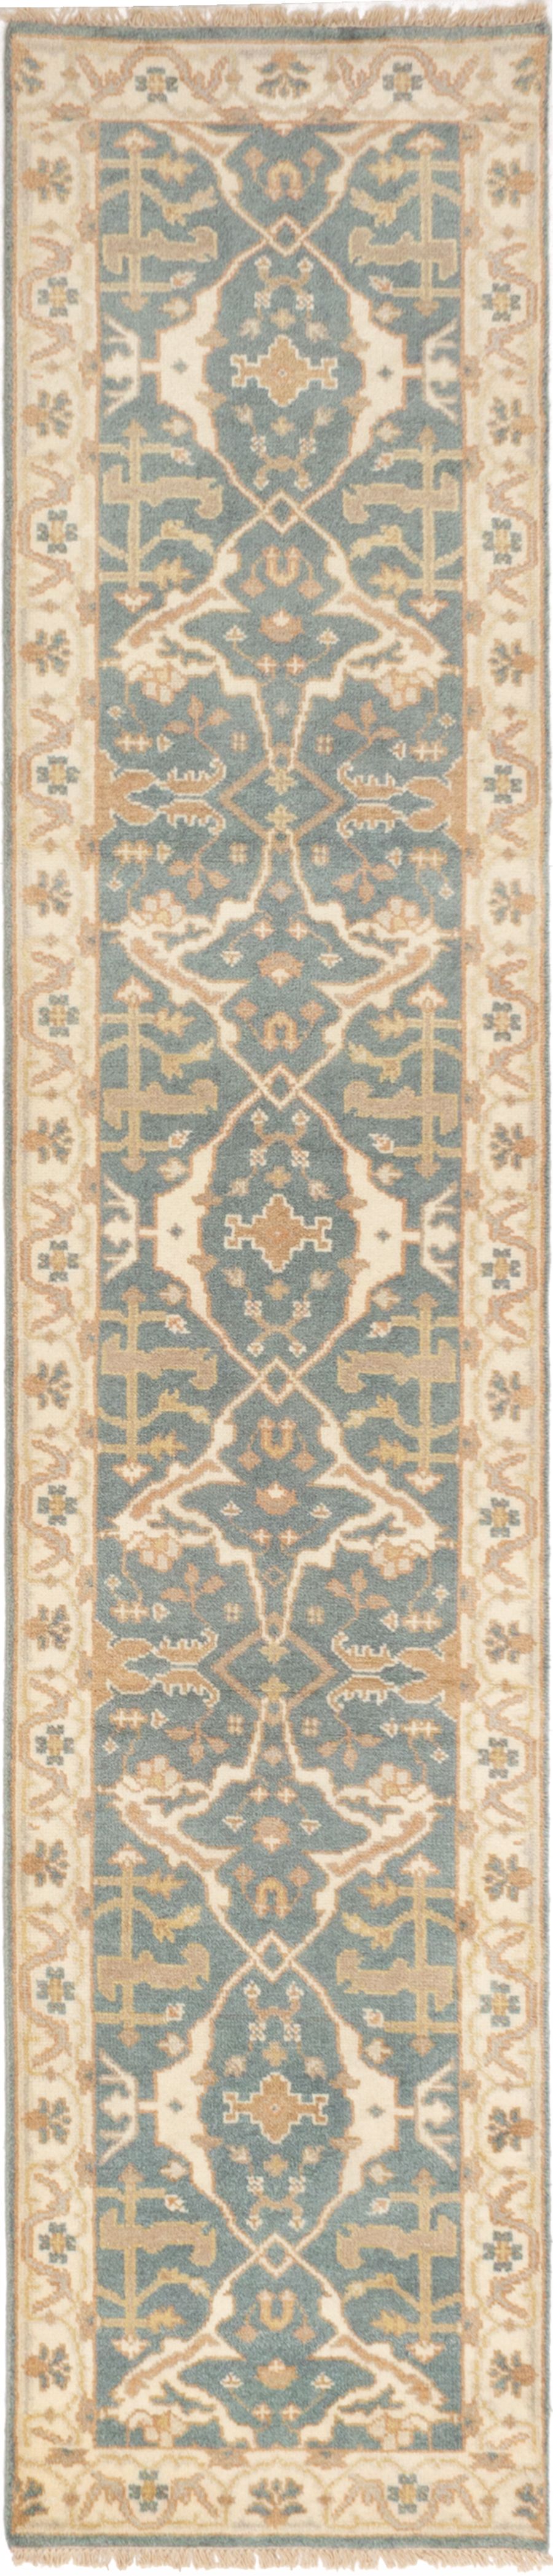 Hand-knotted Royal Ushak Turquoise Wool Rug 2'6" x 11'8" Size: 2'6" x 11'8"  